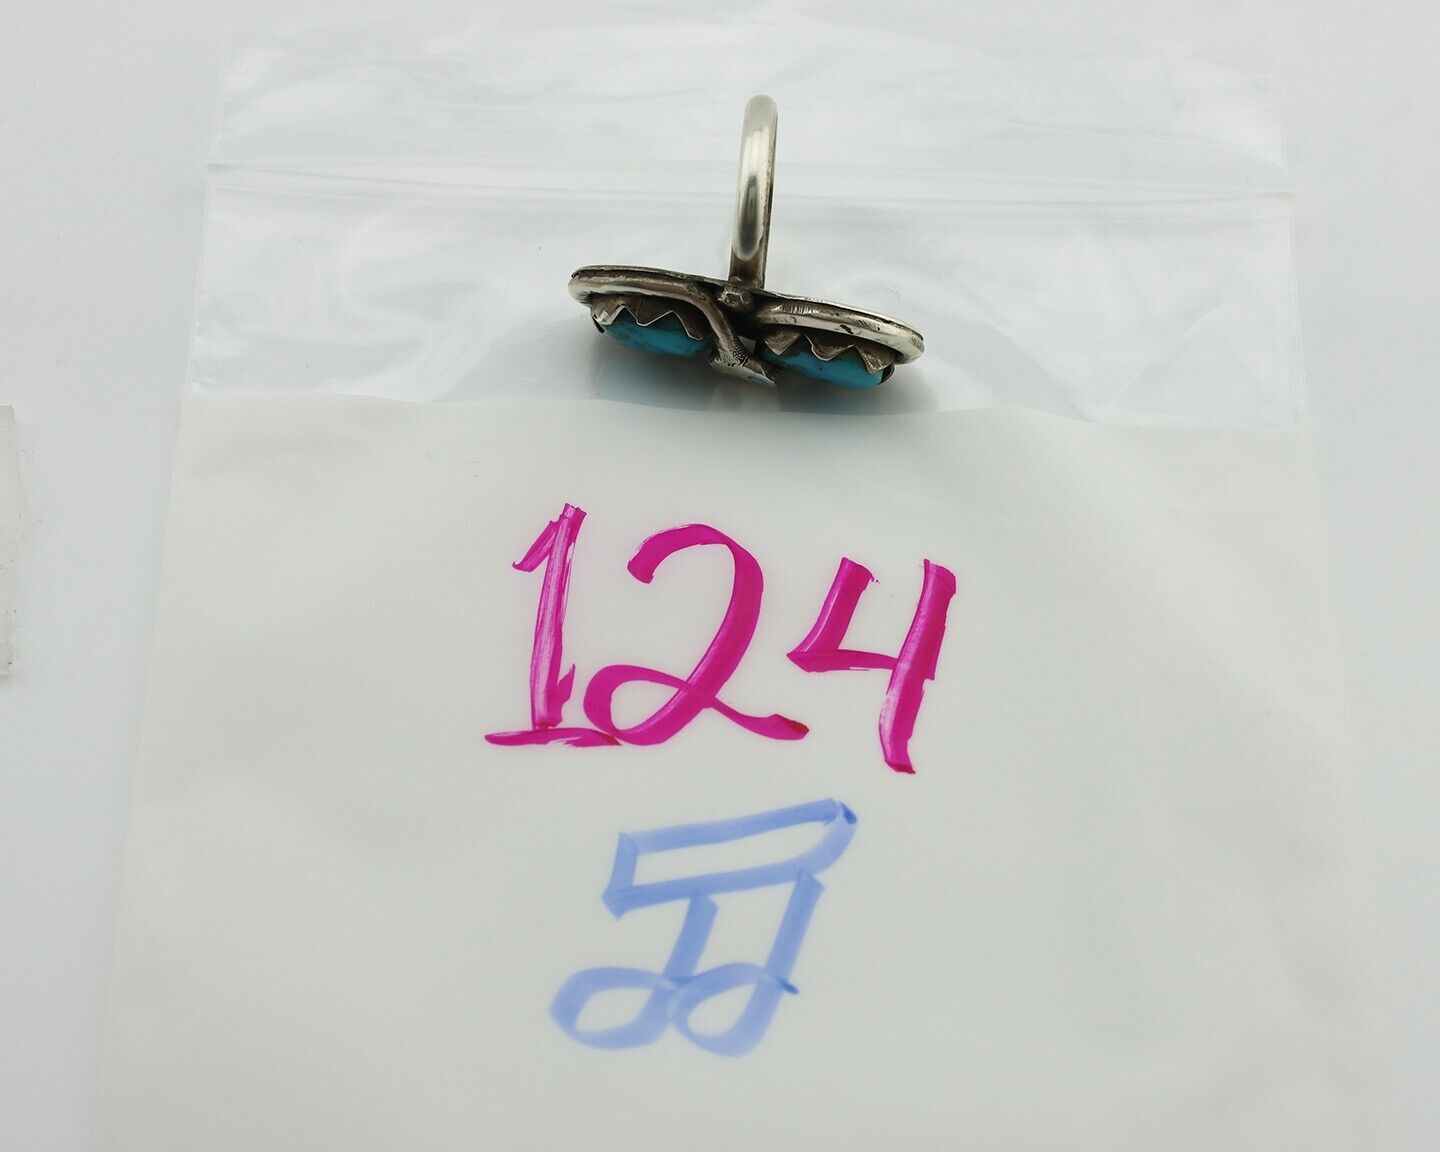 Zuni Ring 925 Silver Blue Turquoise Artist Signed Effie Calavasa C.80's